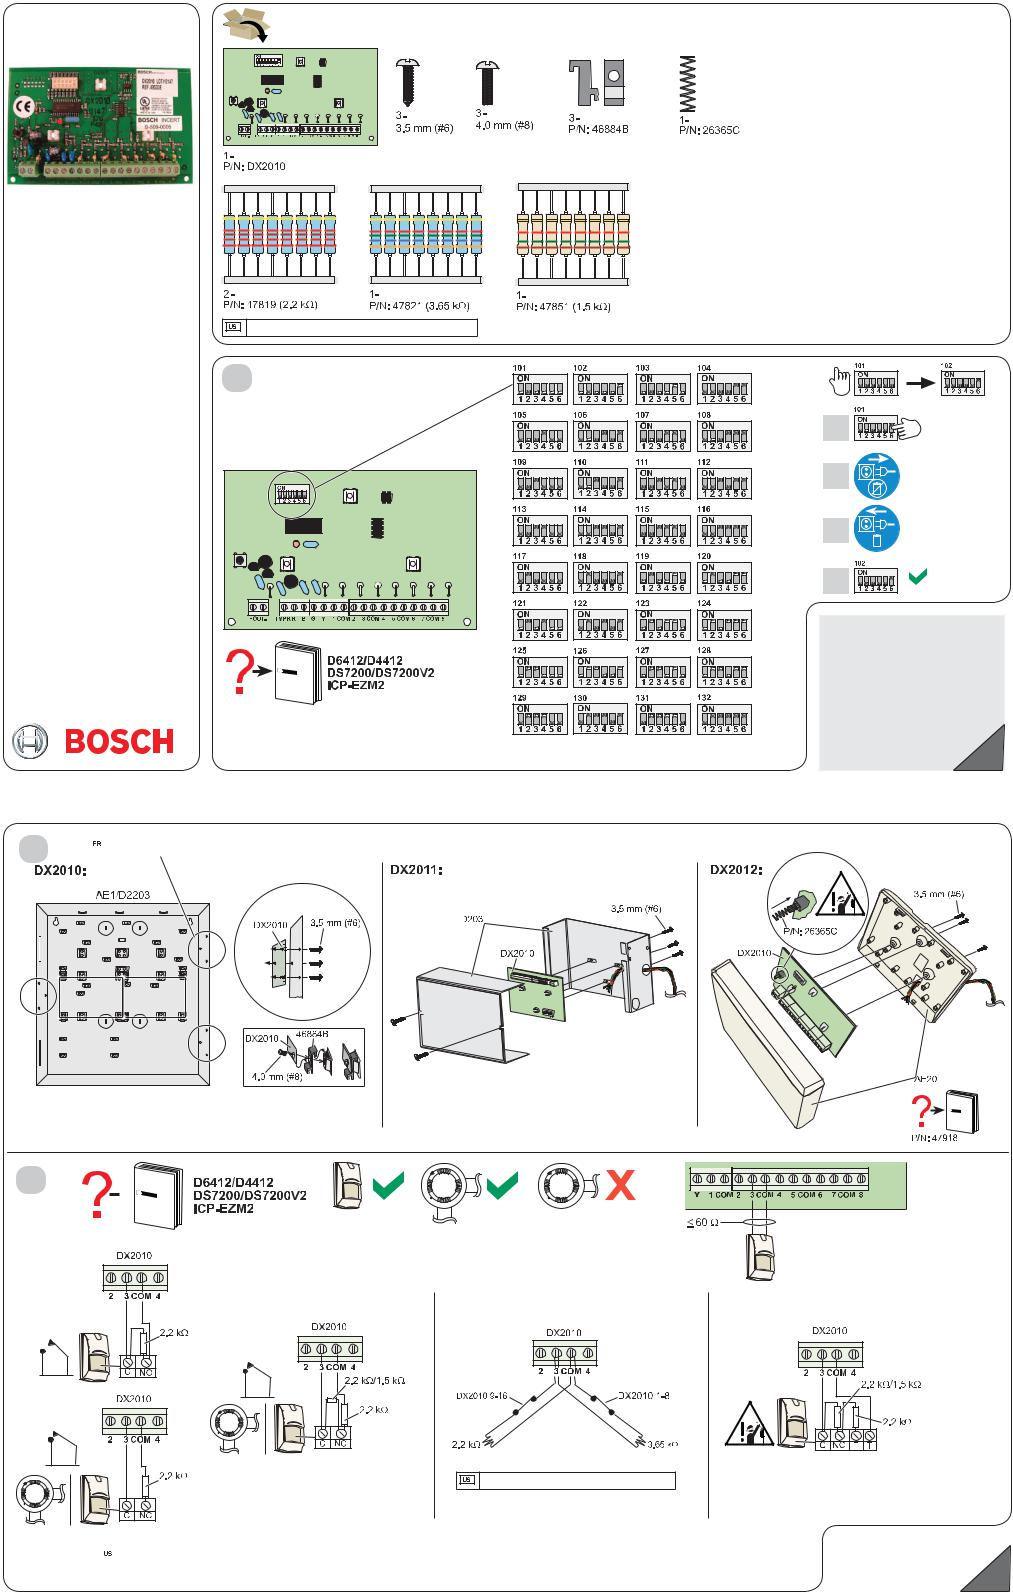 Bosch DX2010 User Manual